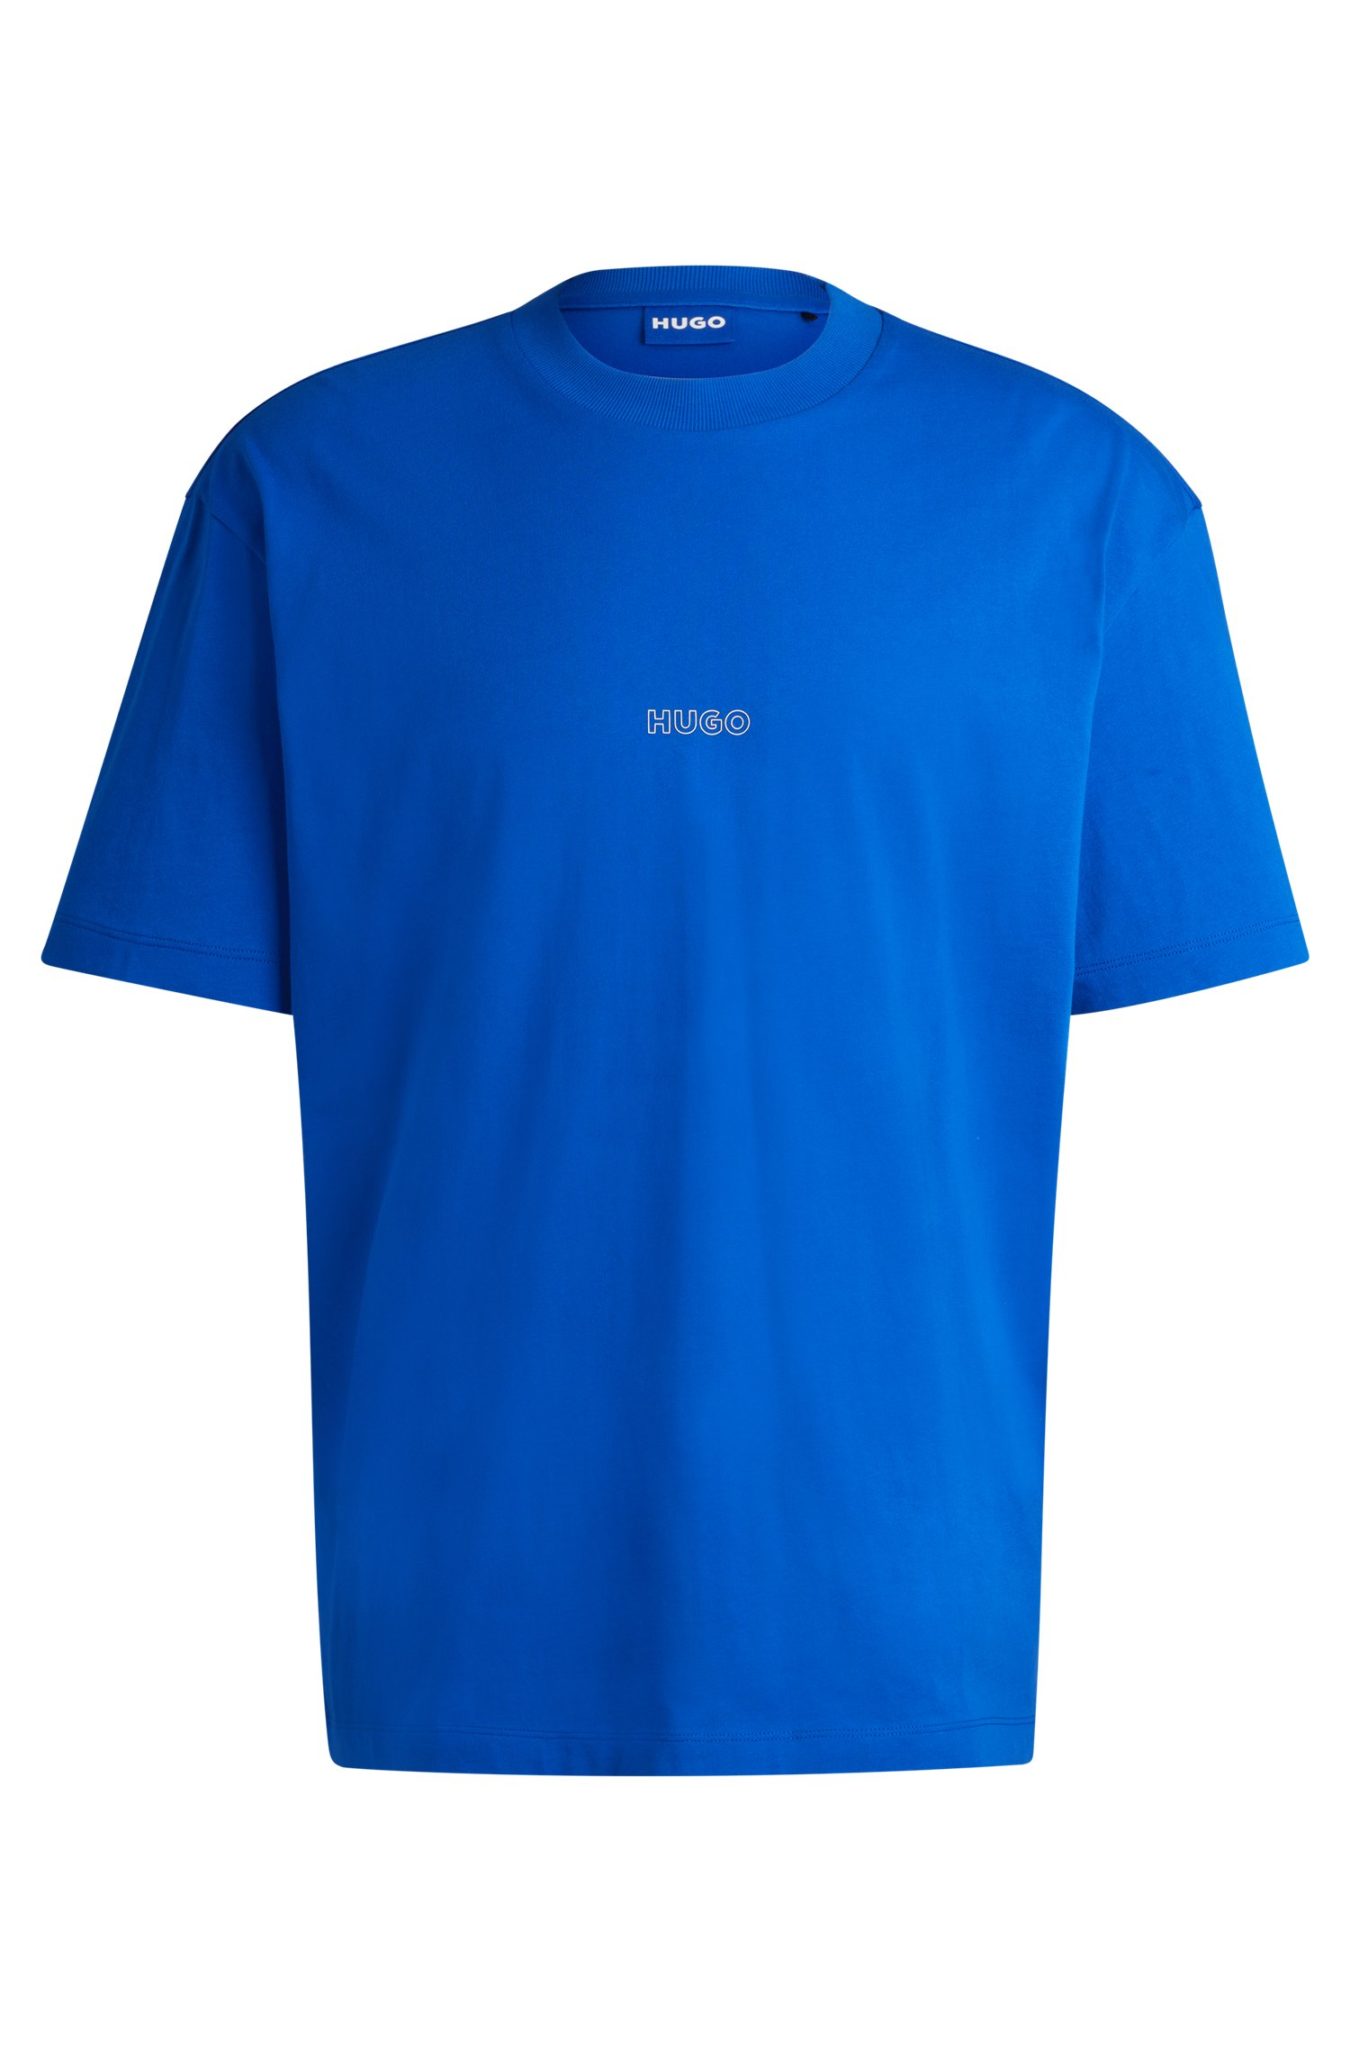 Hugo Boss T-shirt en jersey de coton avec logos contourés